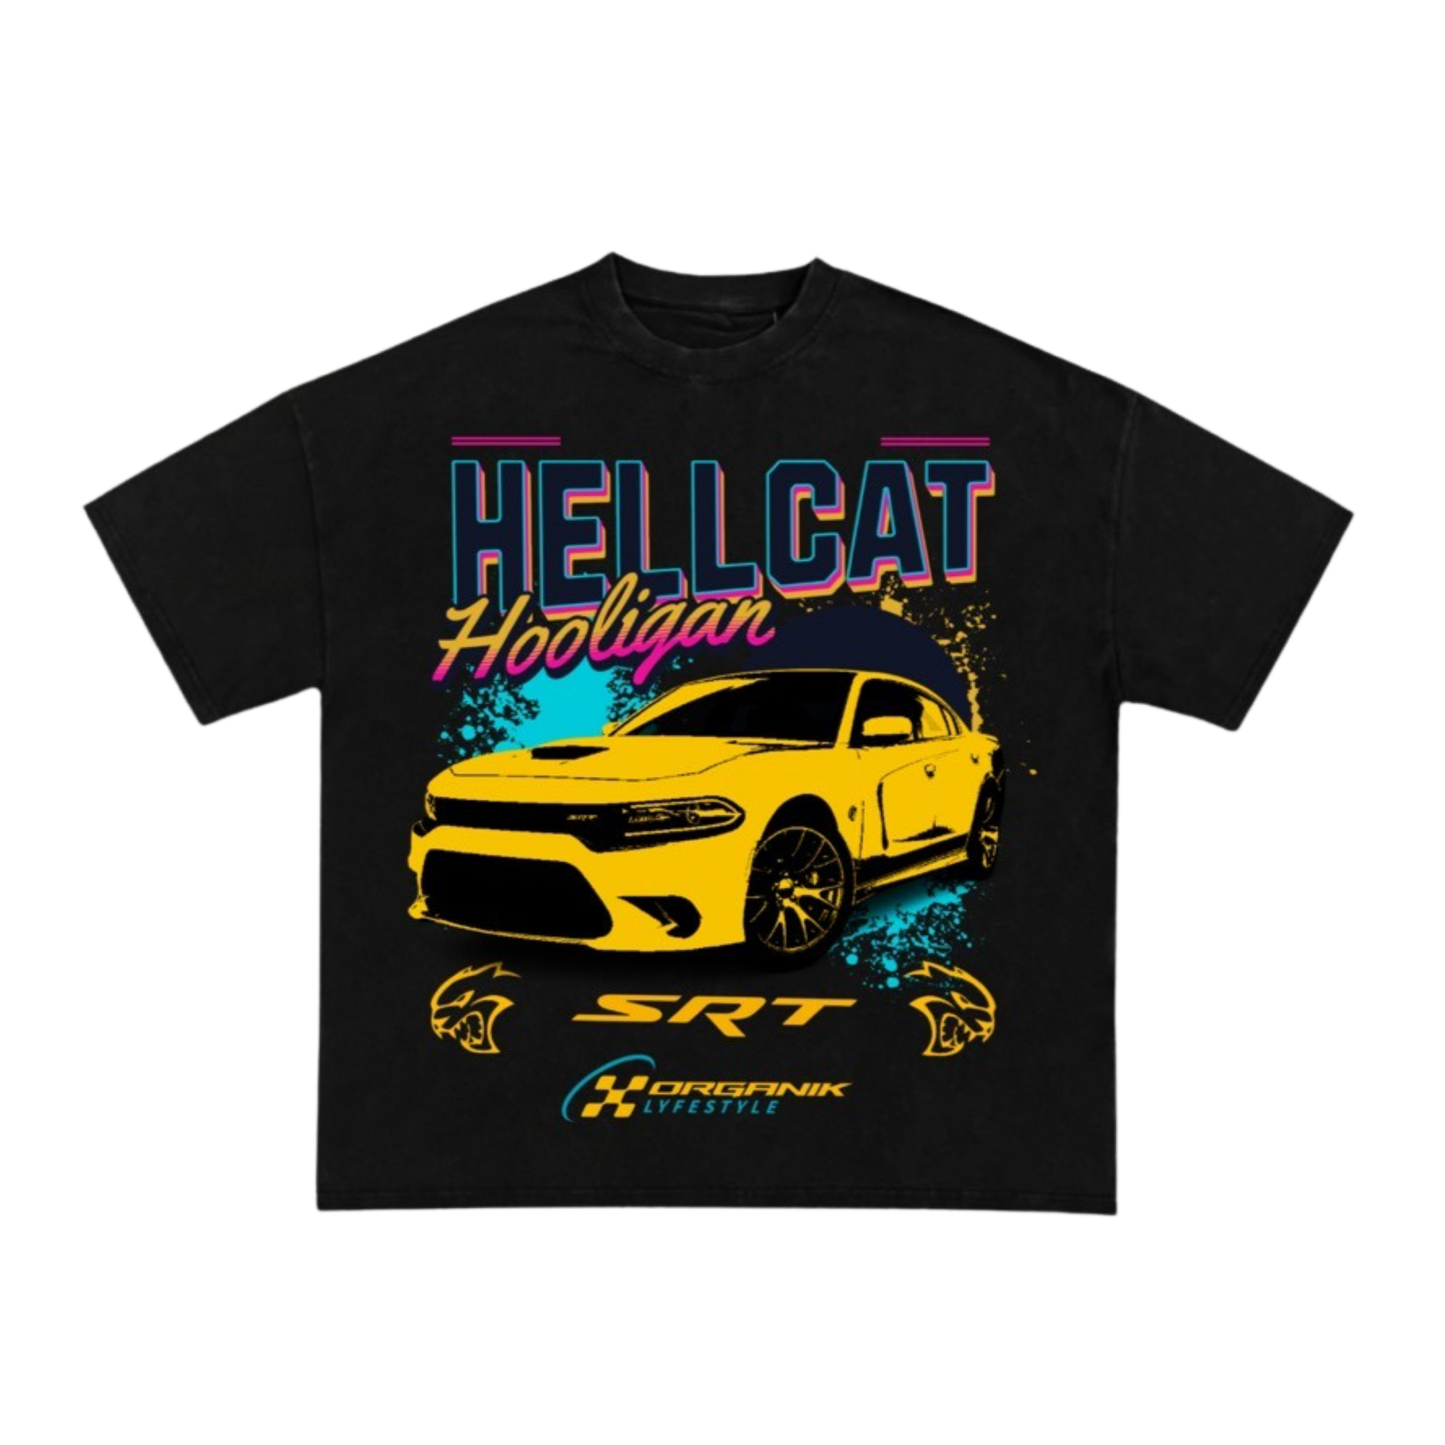 Organik Lyfestyle - Hellcat Hooligan T-Shirt - Black